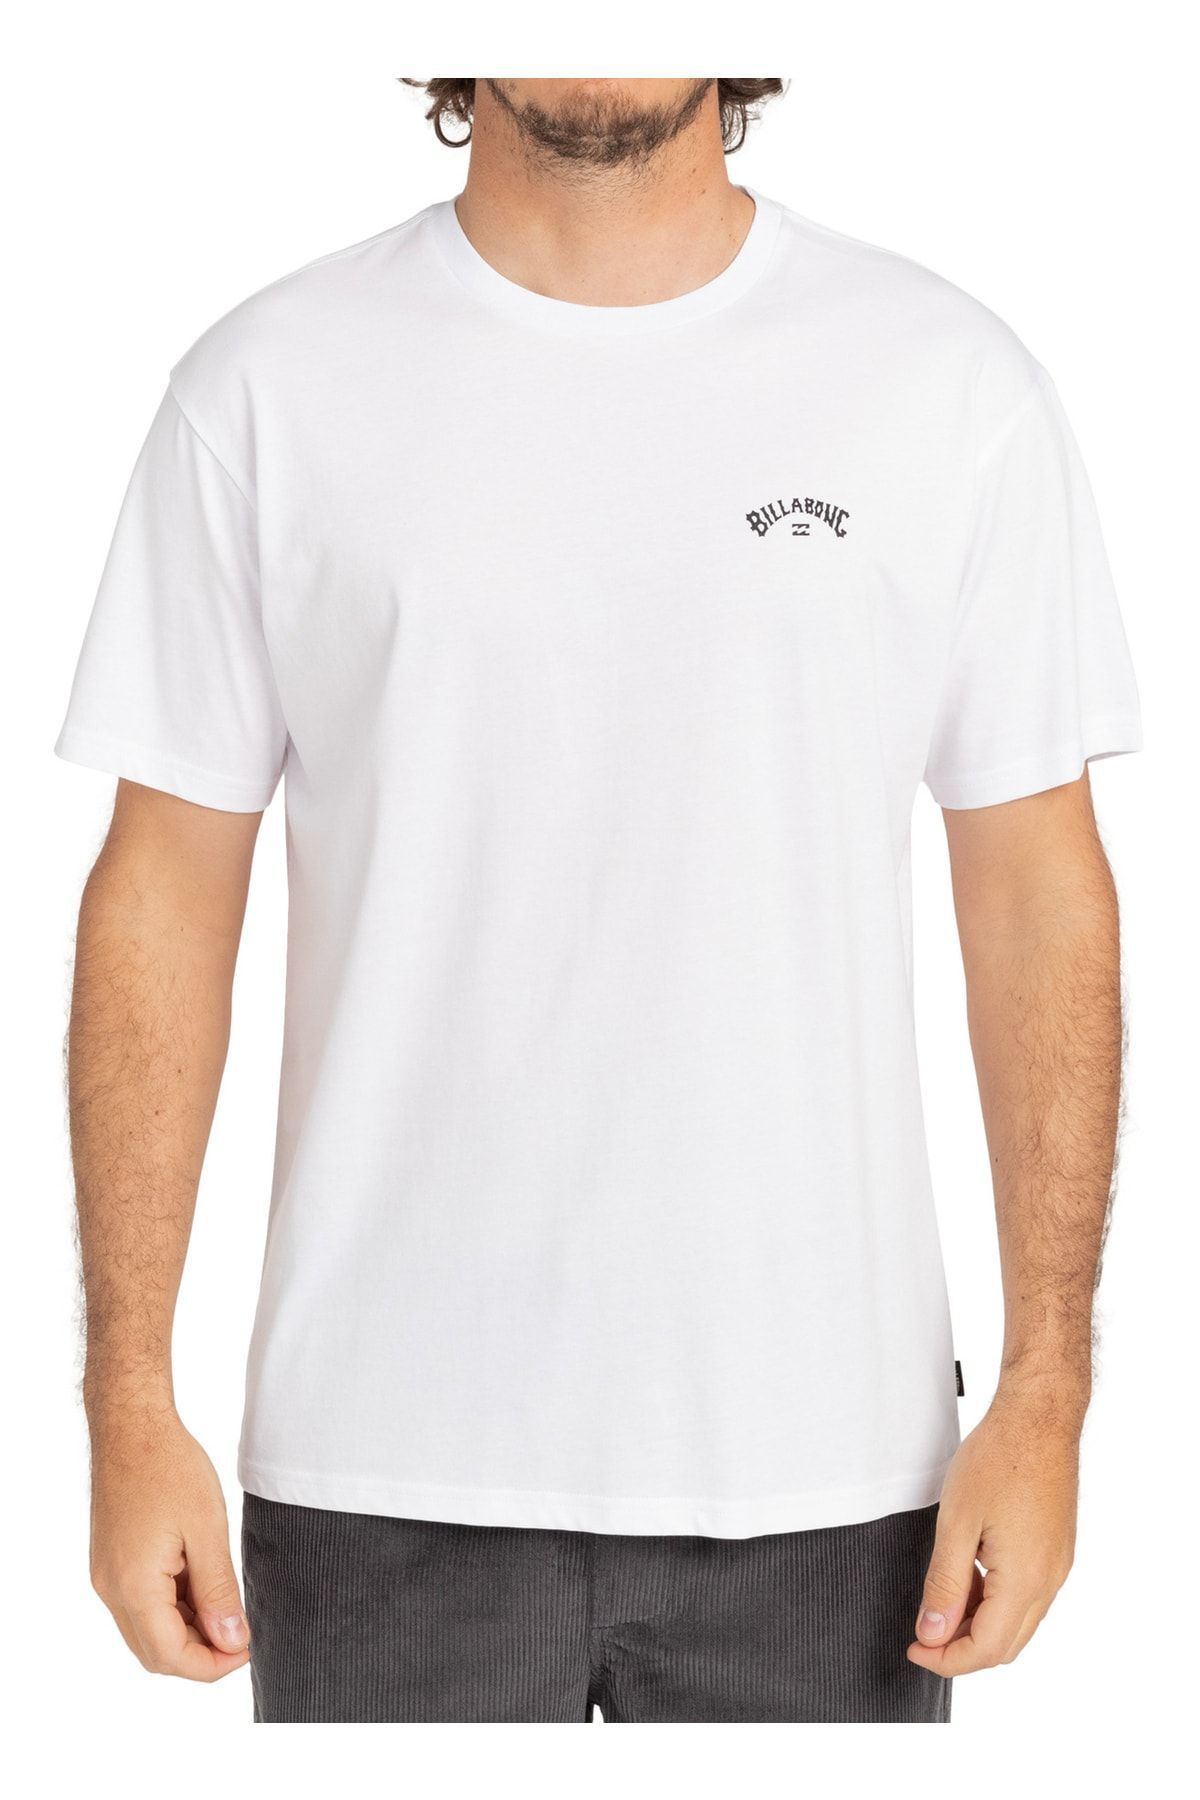 Billabong Yuvarlak Yaka Beyaz Erkek T-shirt C1ss65bıp2 Arch Wave Ss